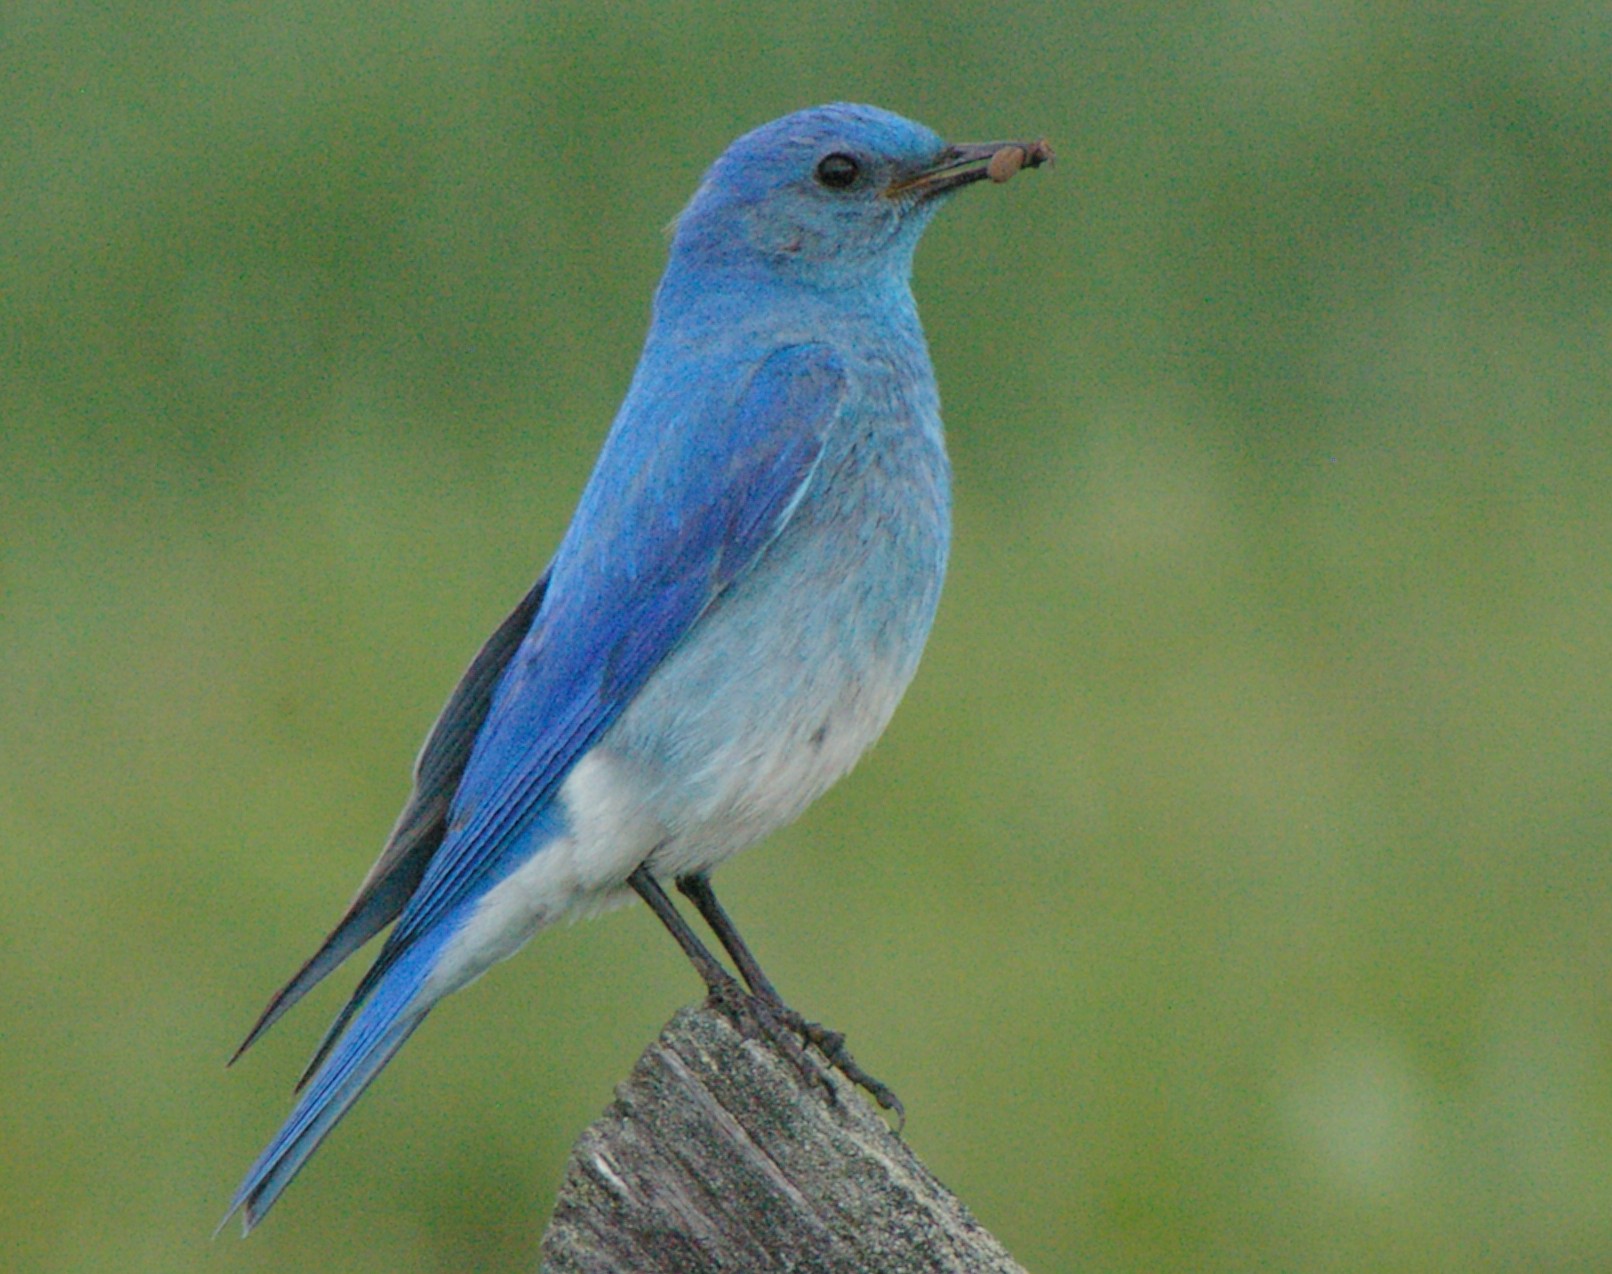 Mountain Bluebird Gathering In Full Swing | East Idaho News